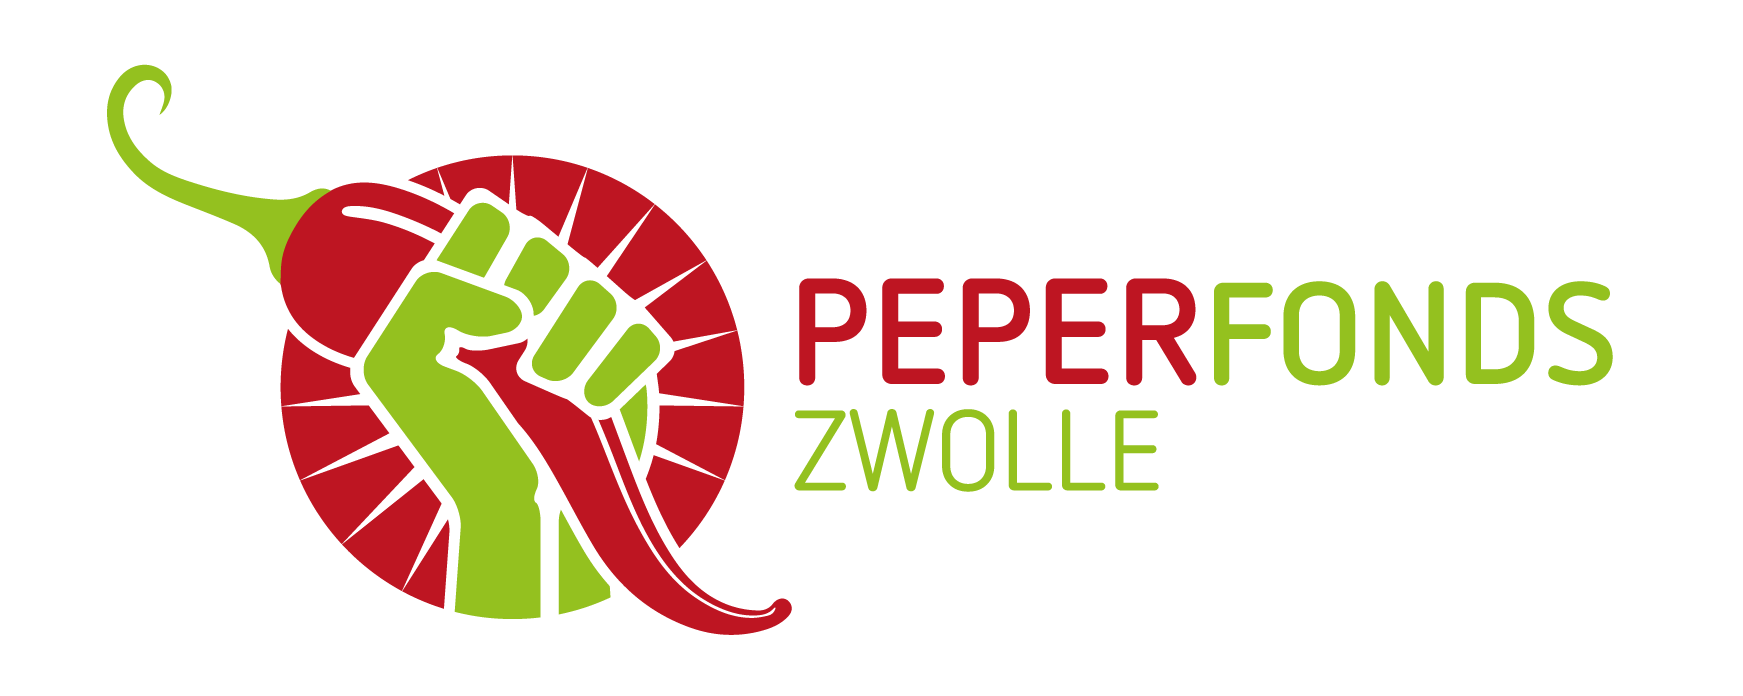 Peperfonds Zwolle